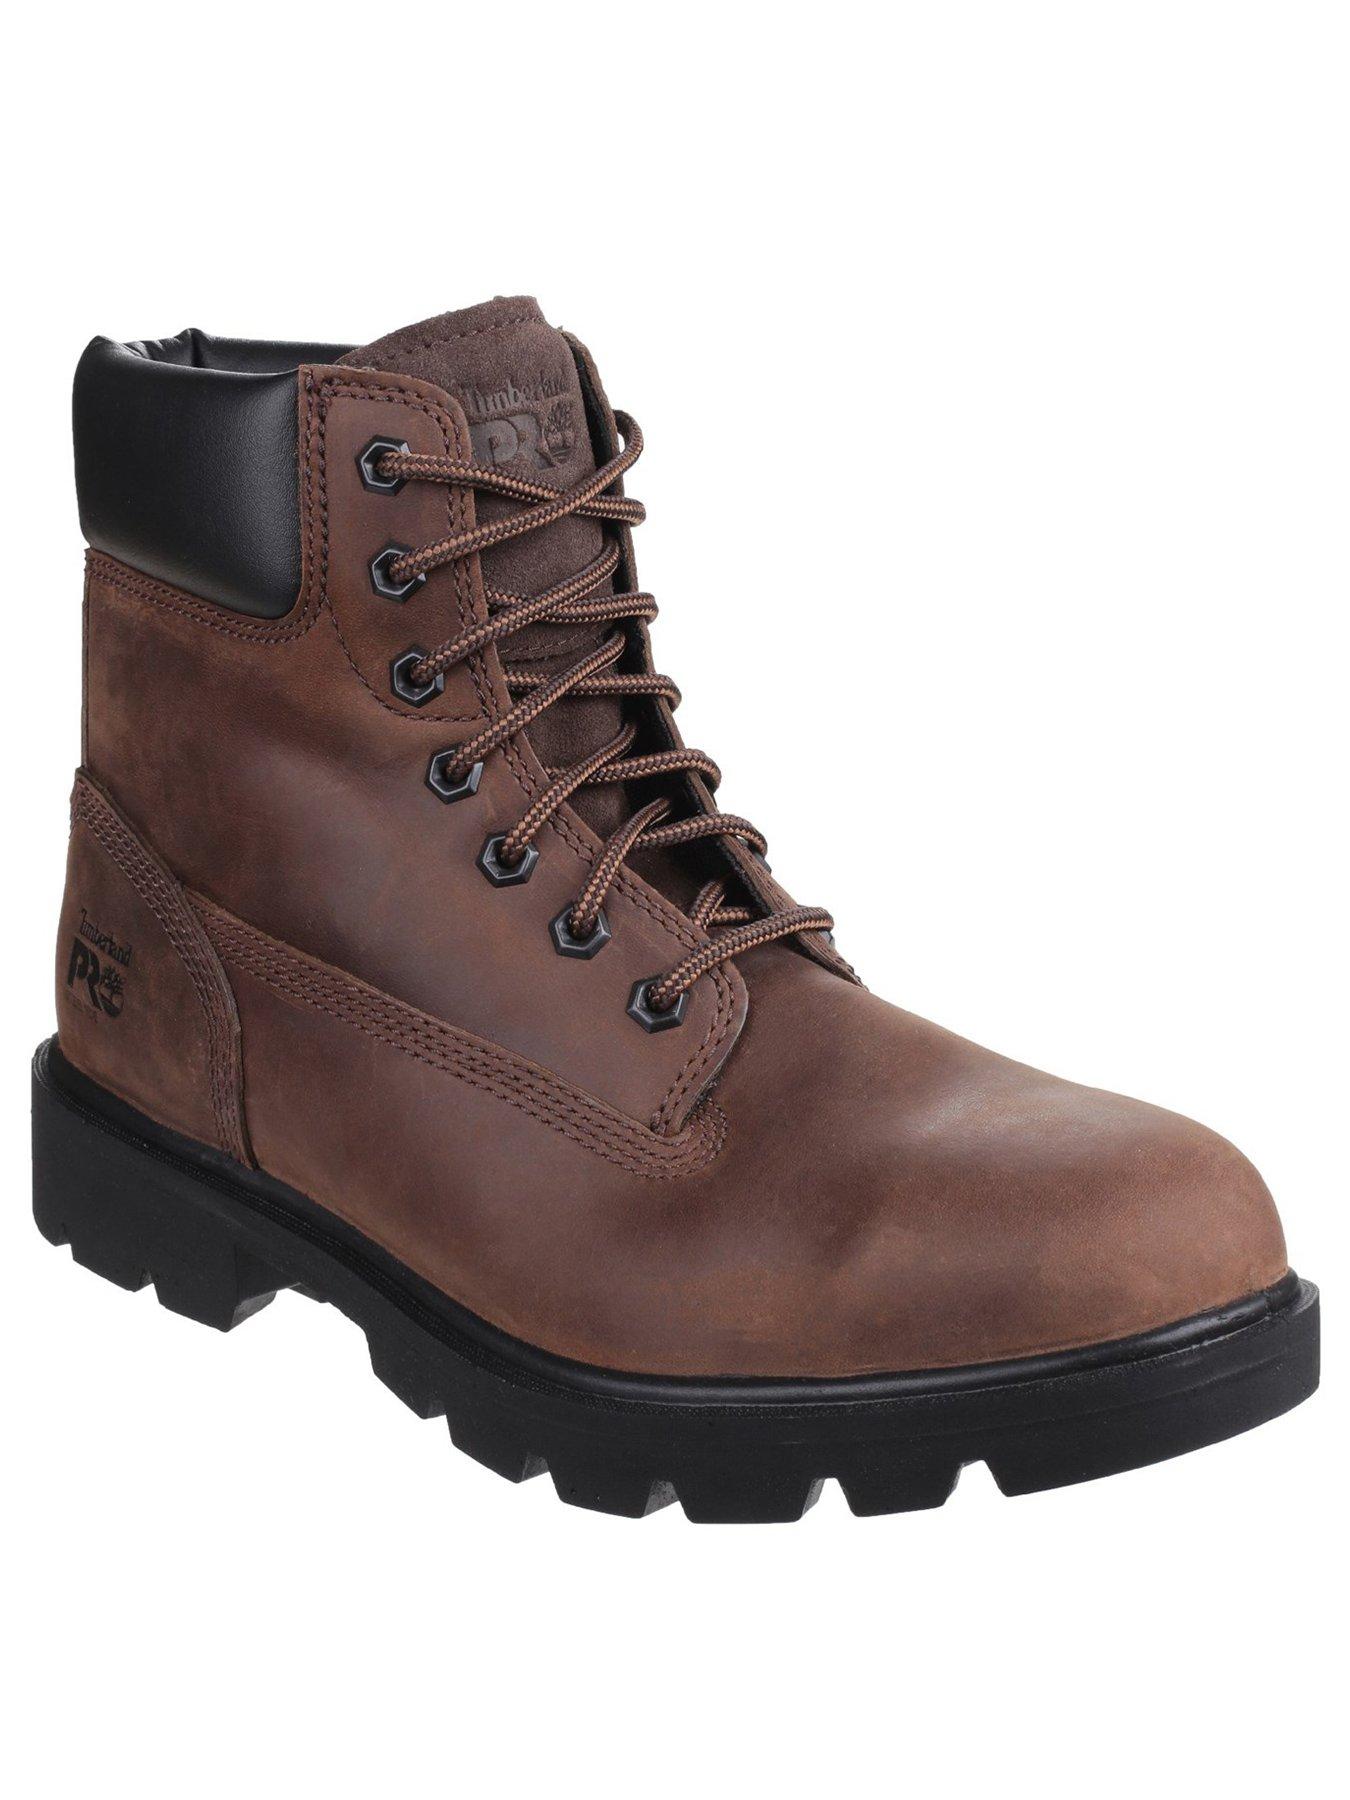 Timberland Boots \u0026 Shoes | Men's 